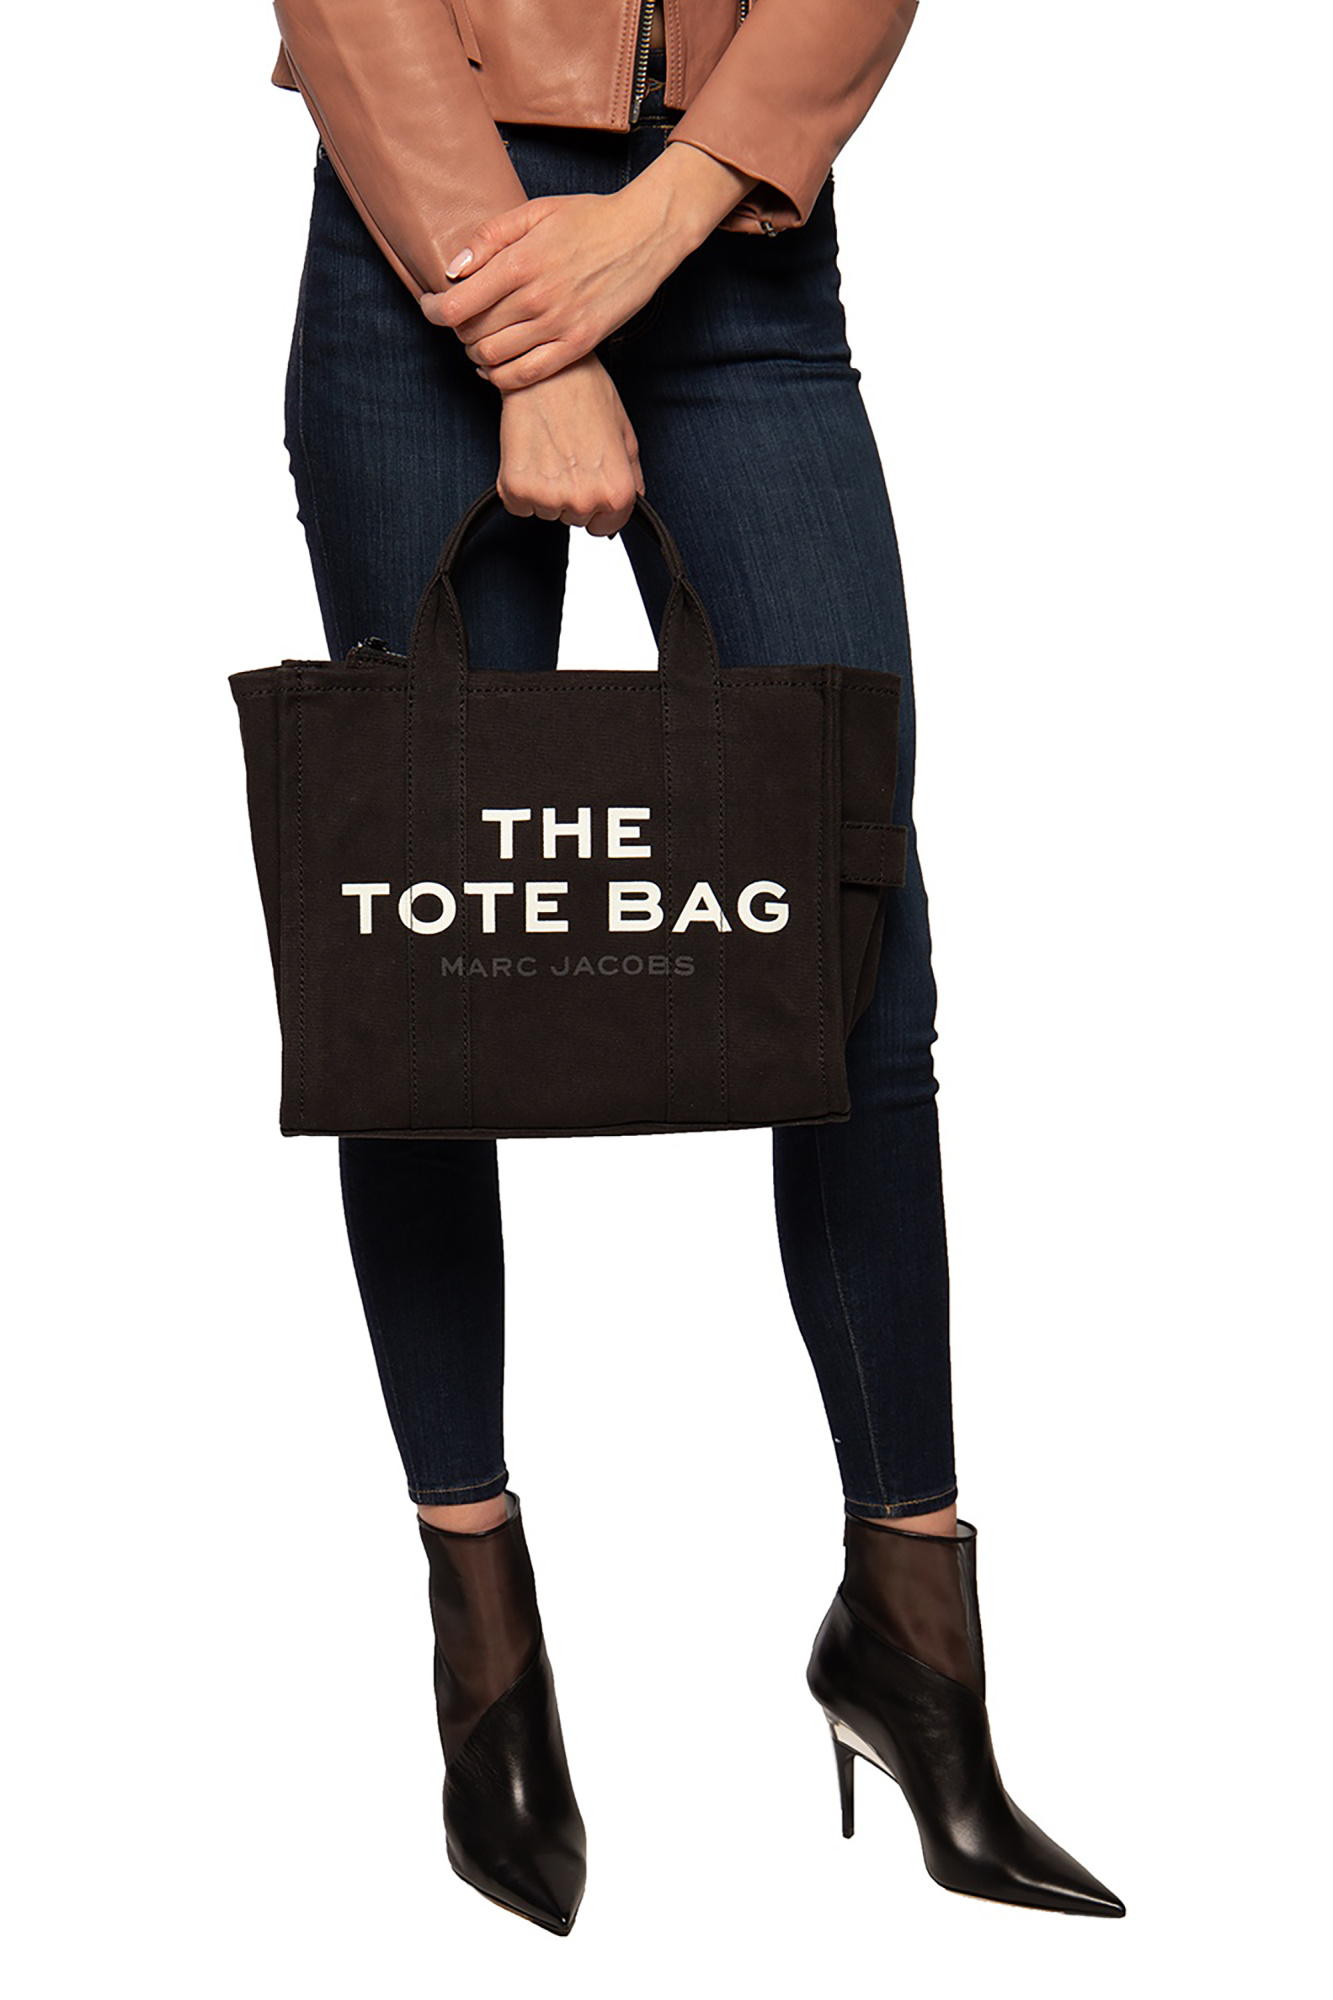 Marc Jacobs] Tote Bag M0016161 001 The Tote Bag Black